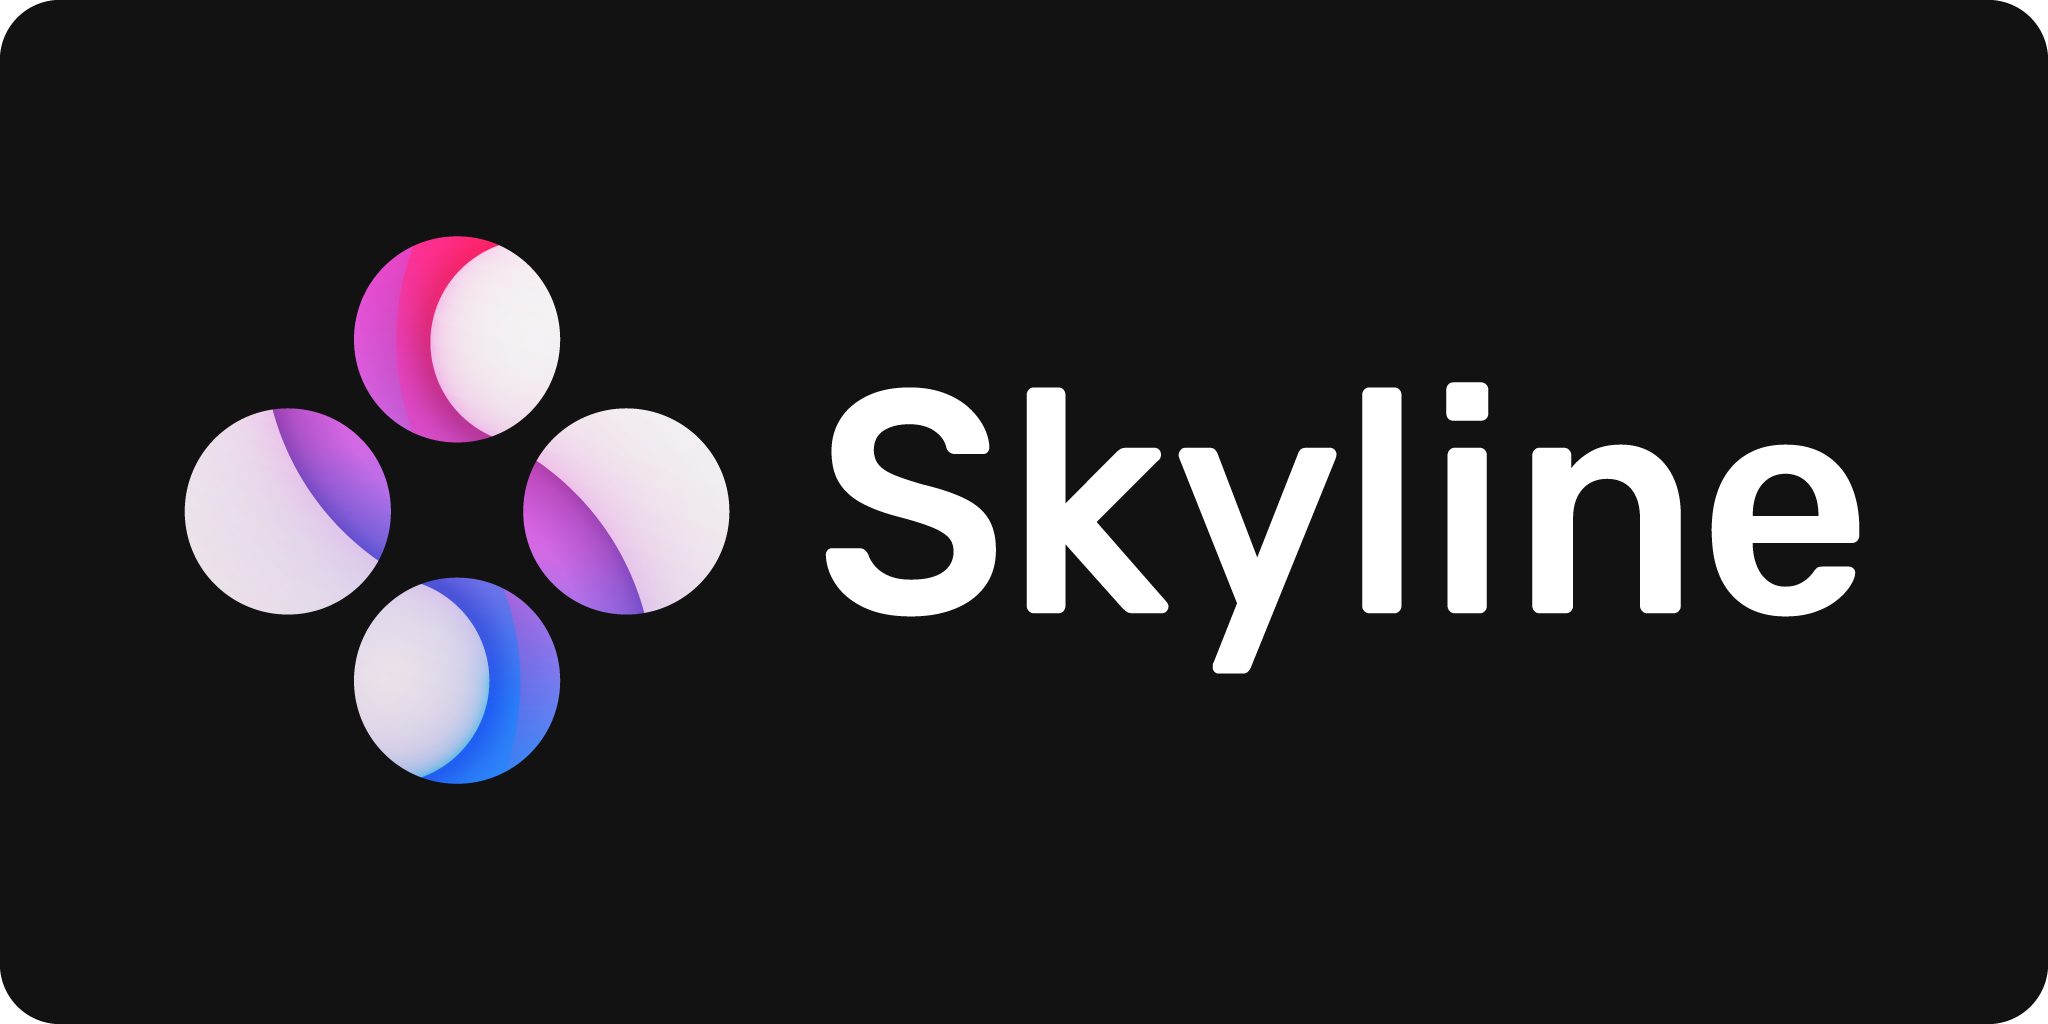 Skyline emulator logo